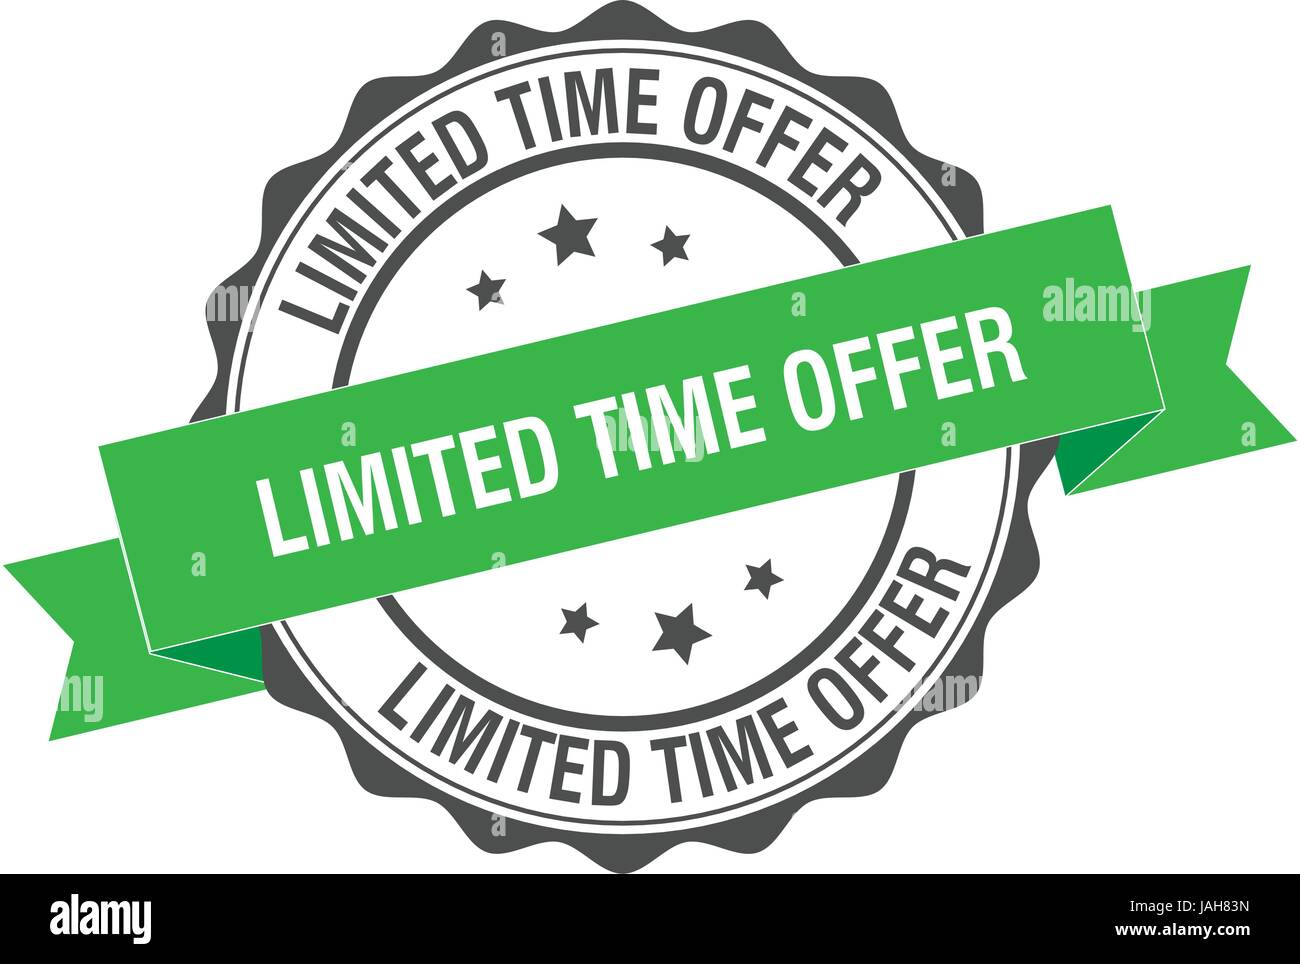 Limited time offer stamp illustration Stock Vector